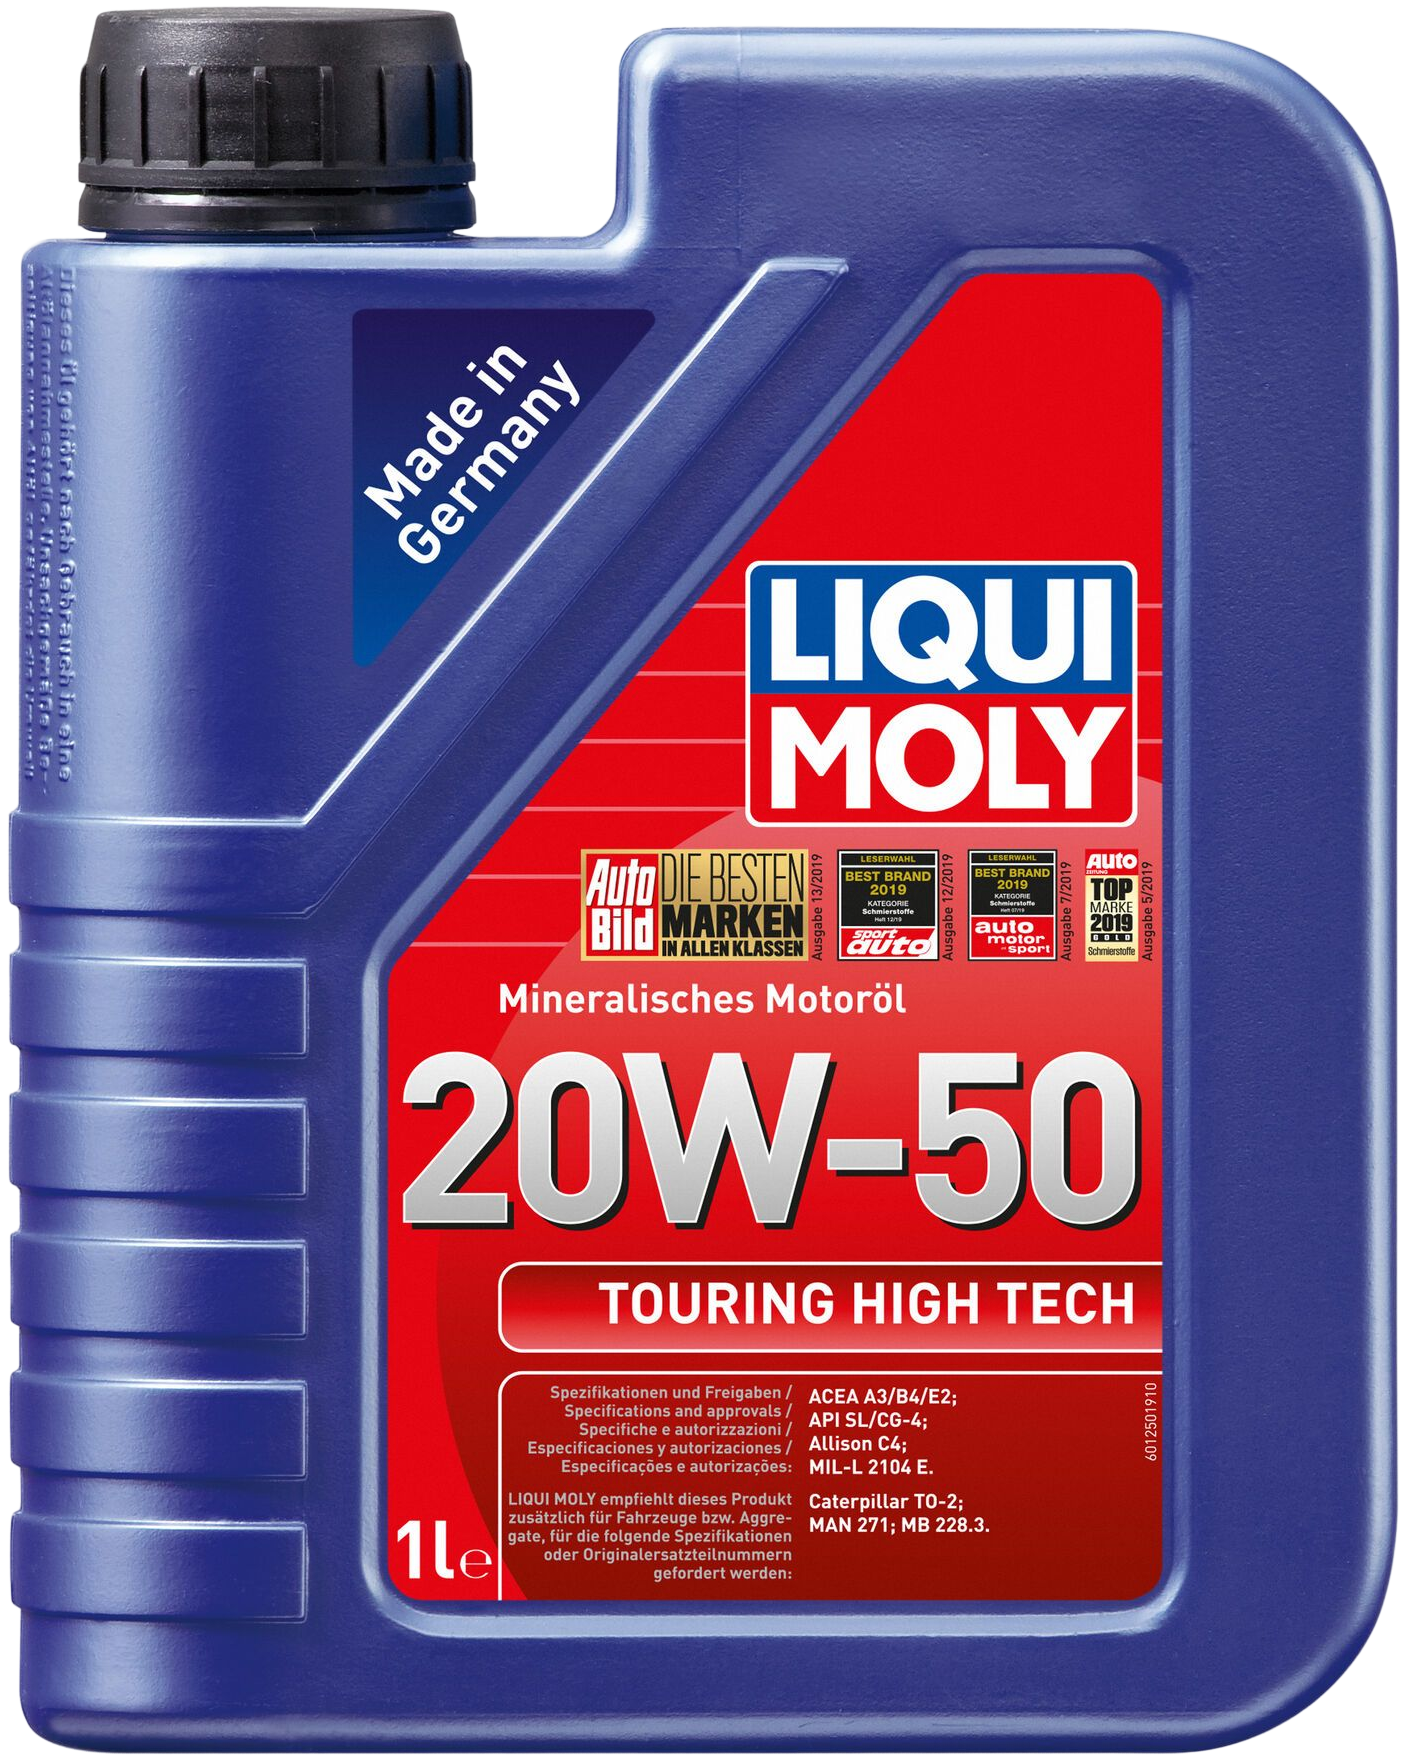 Liqui Moly Touring High Tech 20W-50, 1 lt